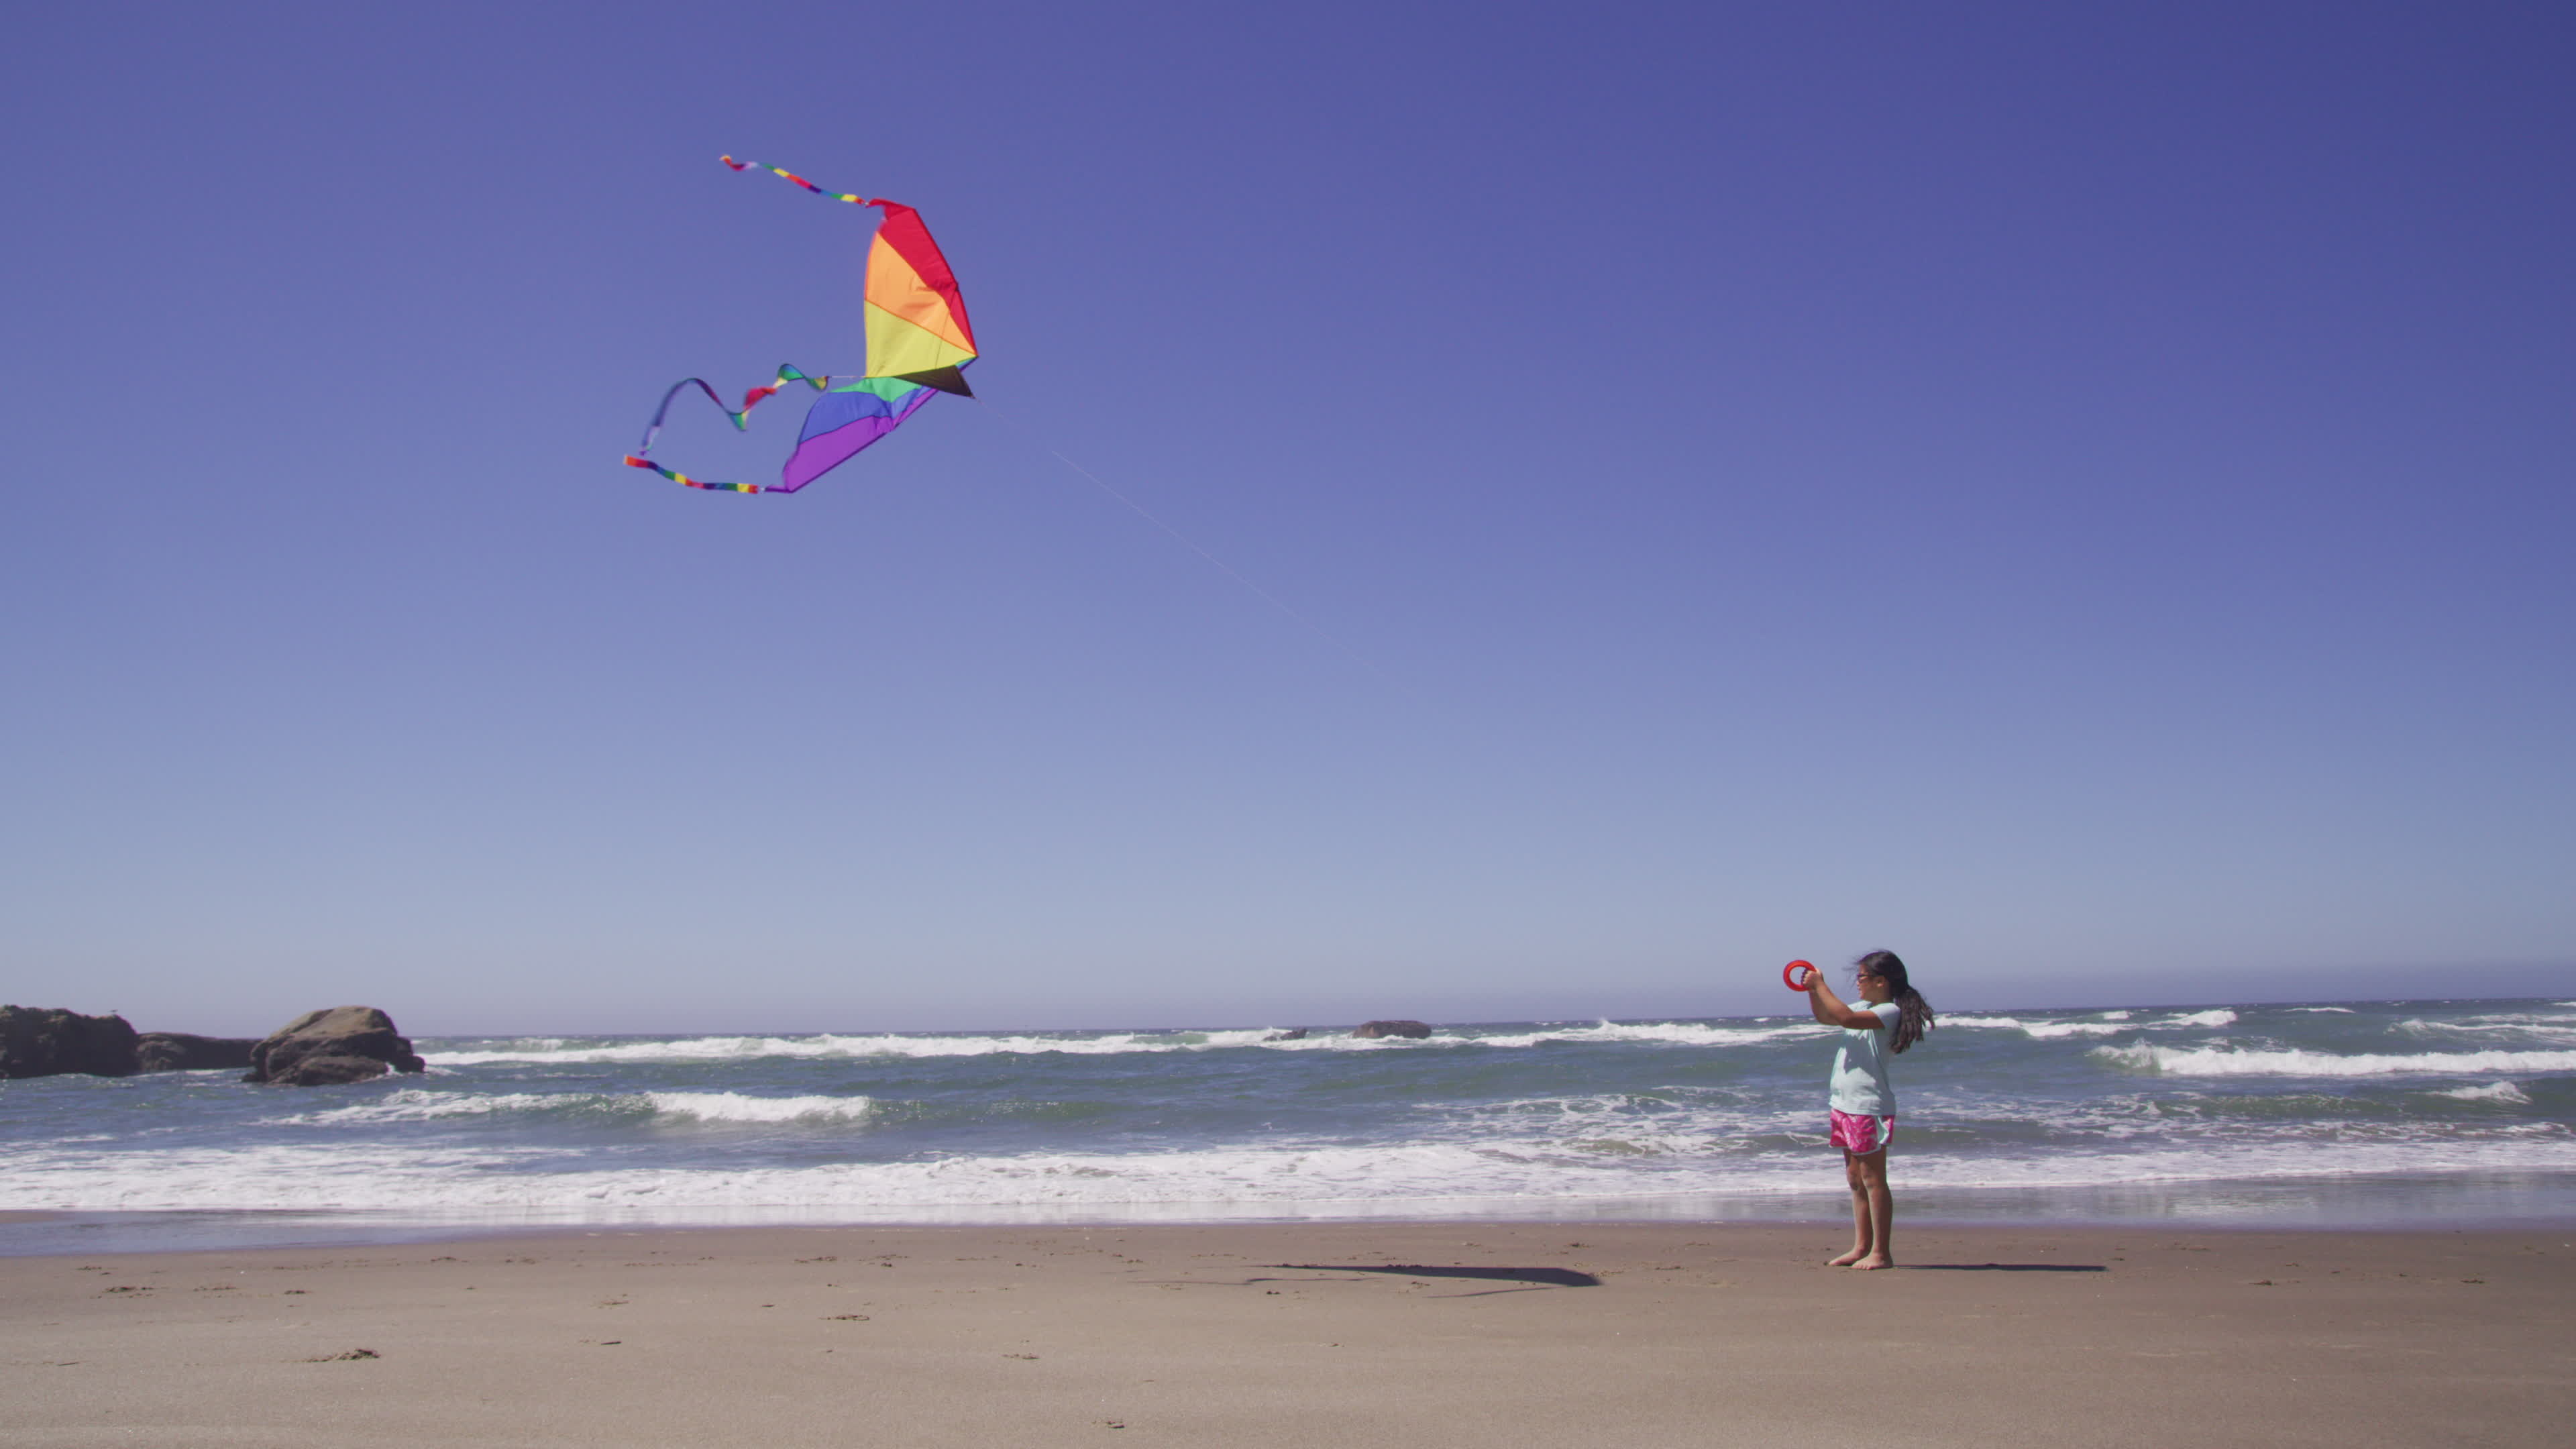 Kite Sports: Flying a kite at the beach, Trinagle shape, Lightweight ripstop nylon. 3840x2160 4K Background.